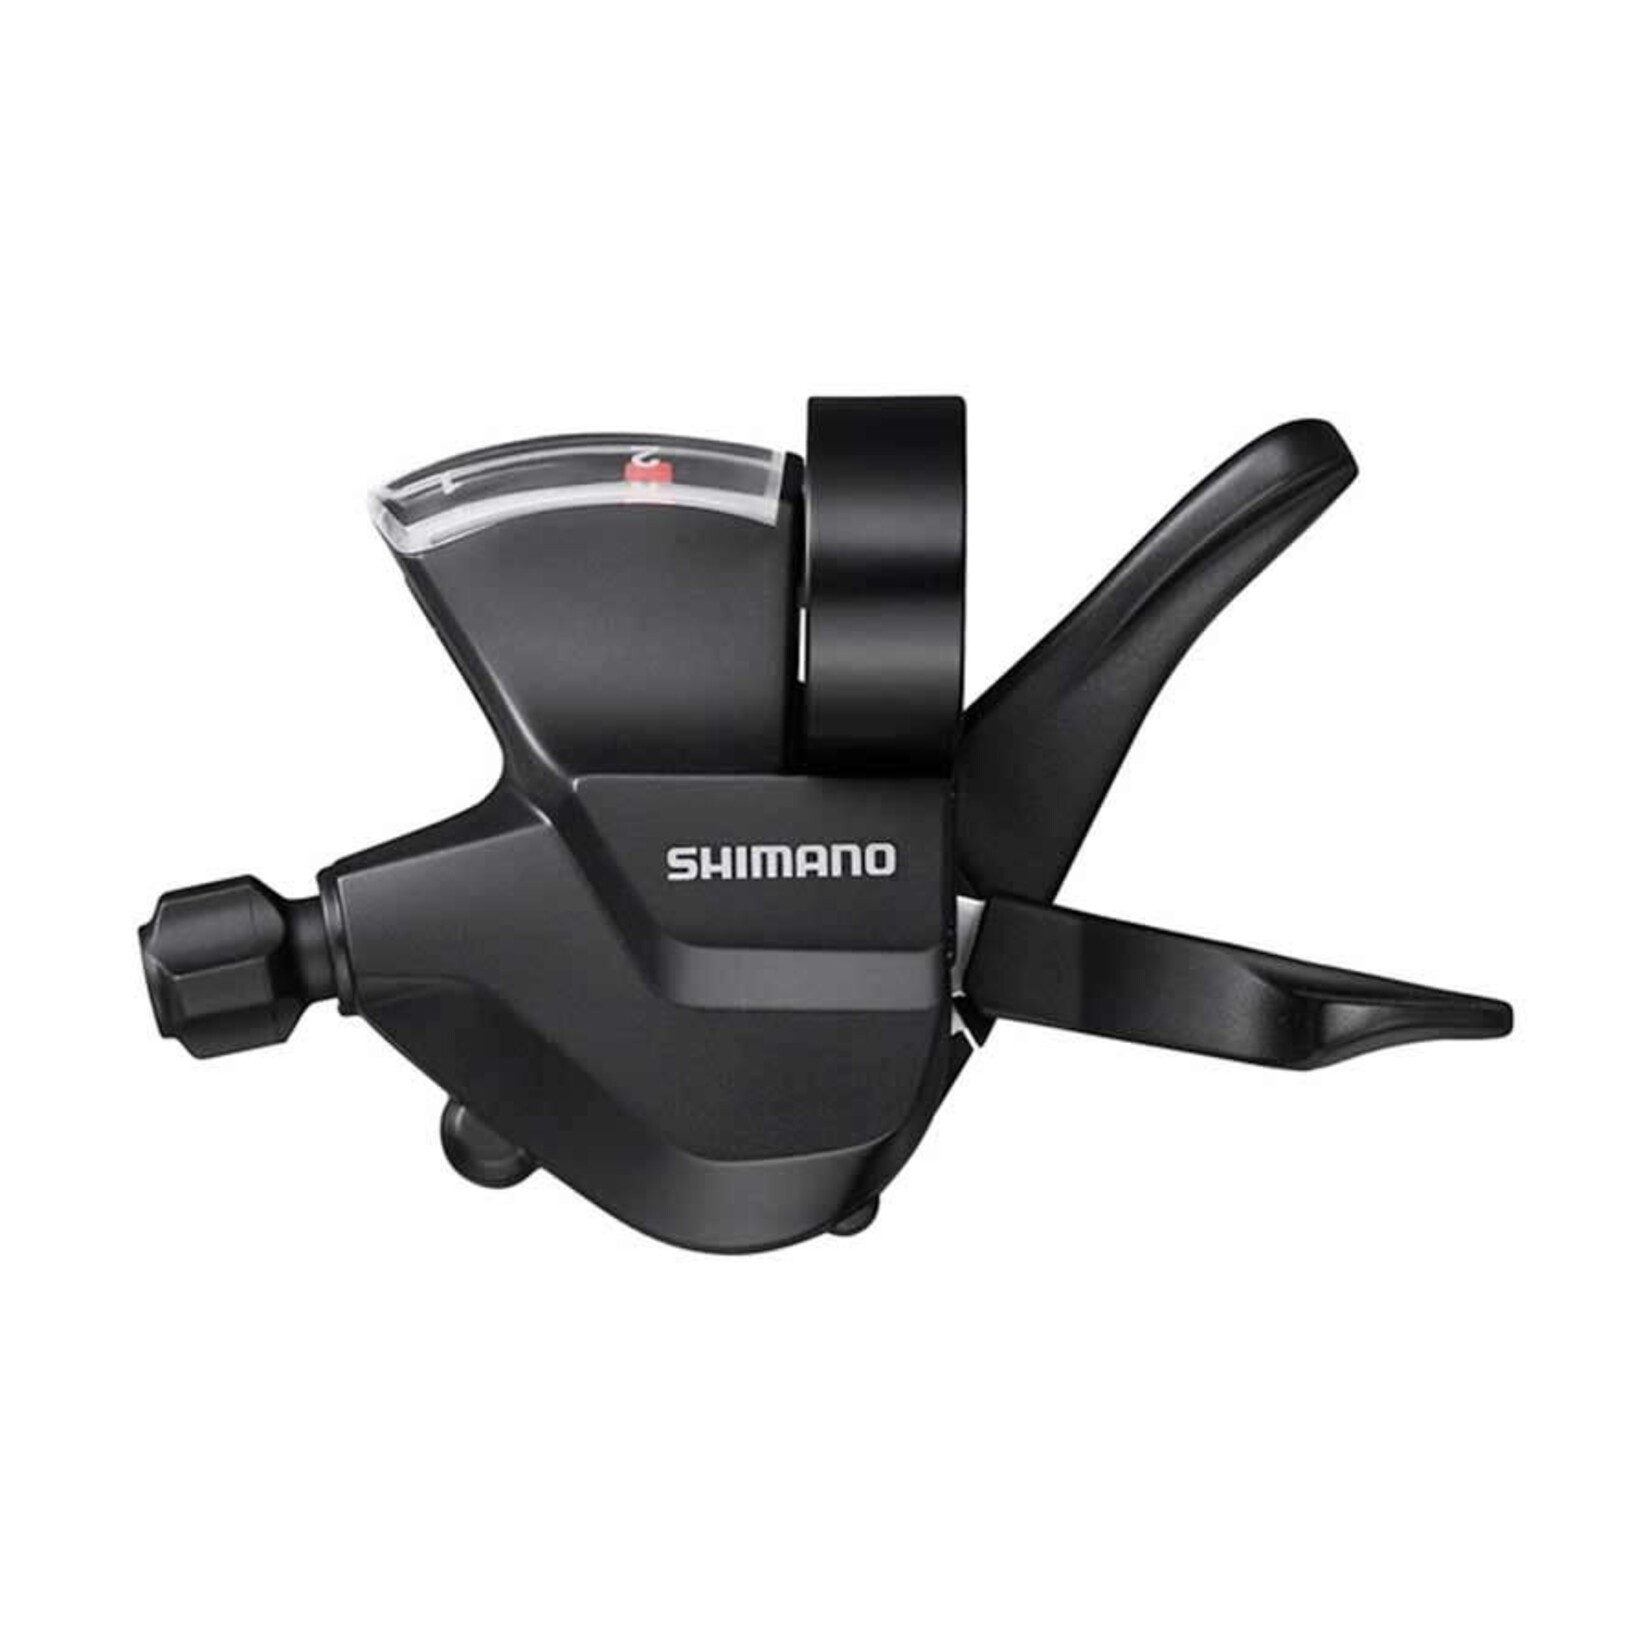 Shimano Shimano Trigger Shifter, SL-M315-8R, 8-Speed, Blk